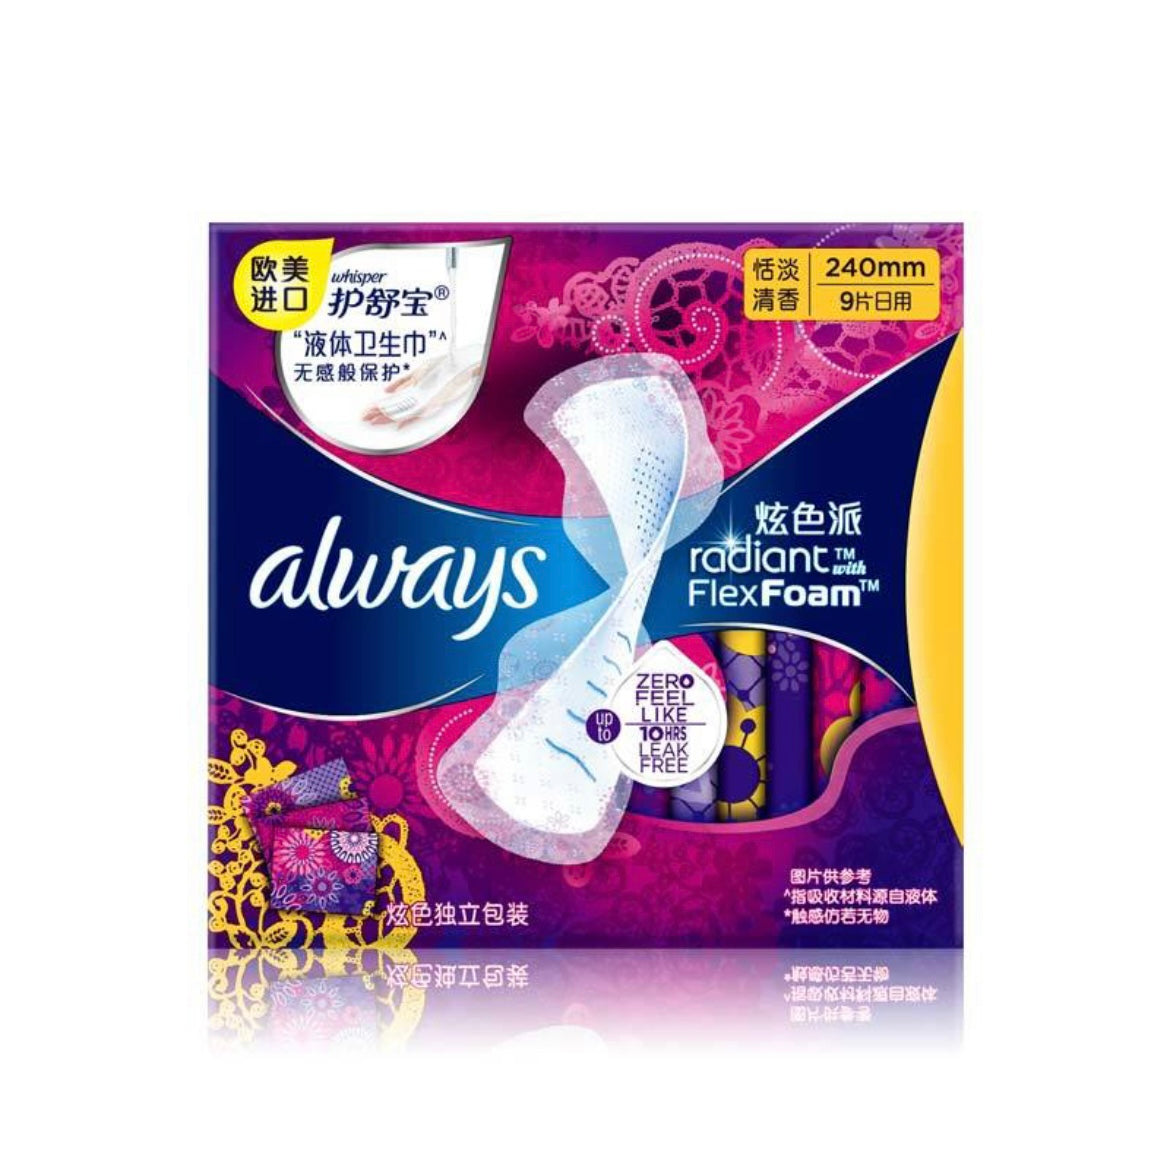 Whisper Always Infinity Fragrant Anti-Bacteria Liquid Sanitary Pad (Day) 9/16Pcs 护舒宝恬淡清香抗菌液体卫生巾日用